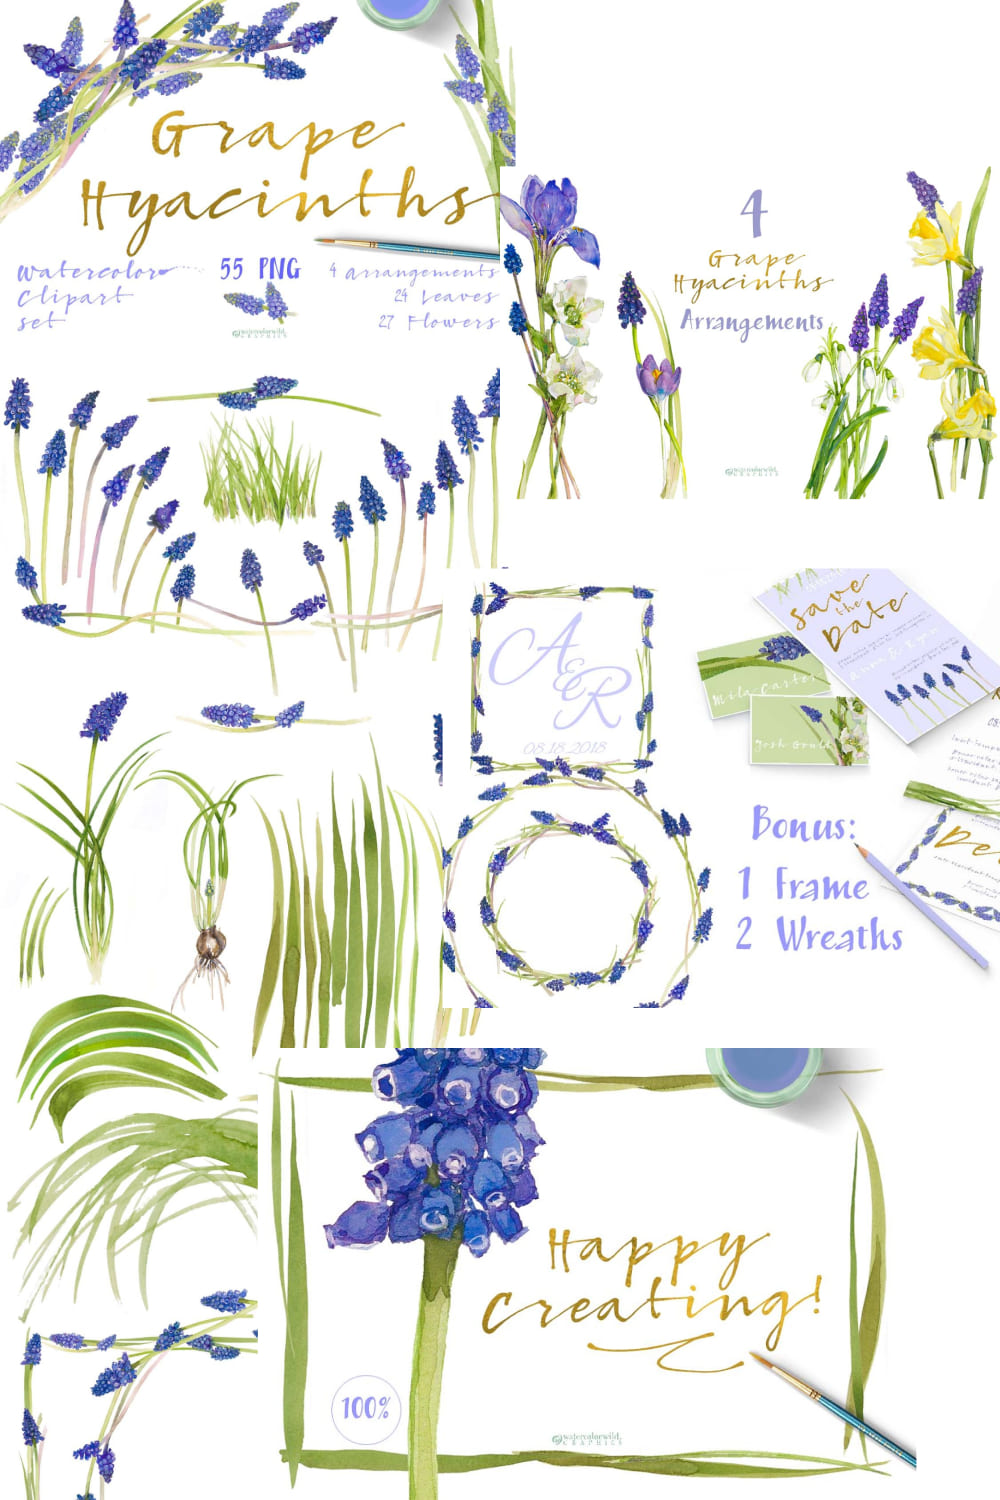 Grape Hyacinths_Blue Spring pinterest image.